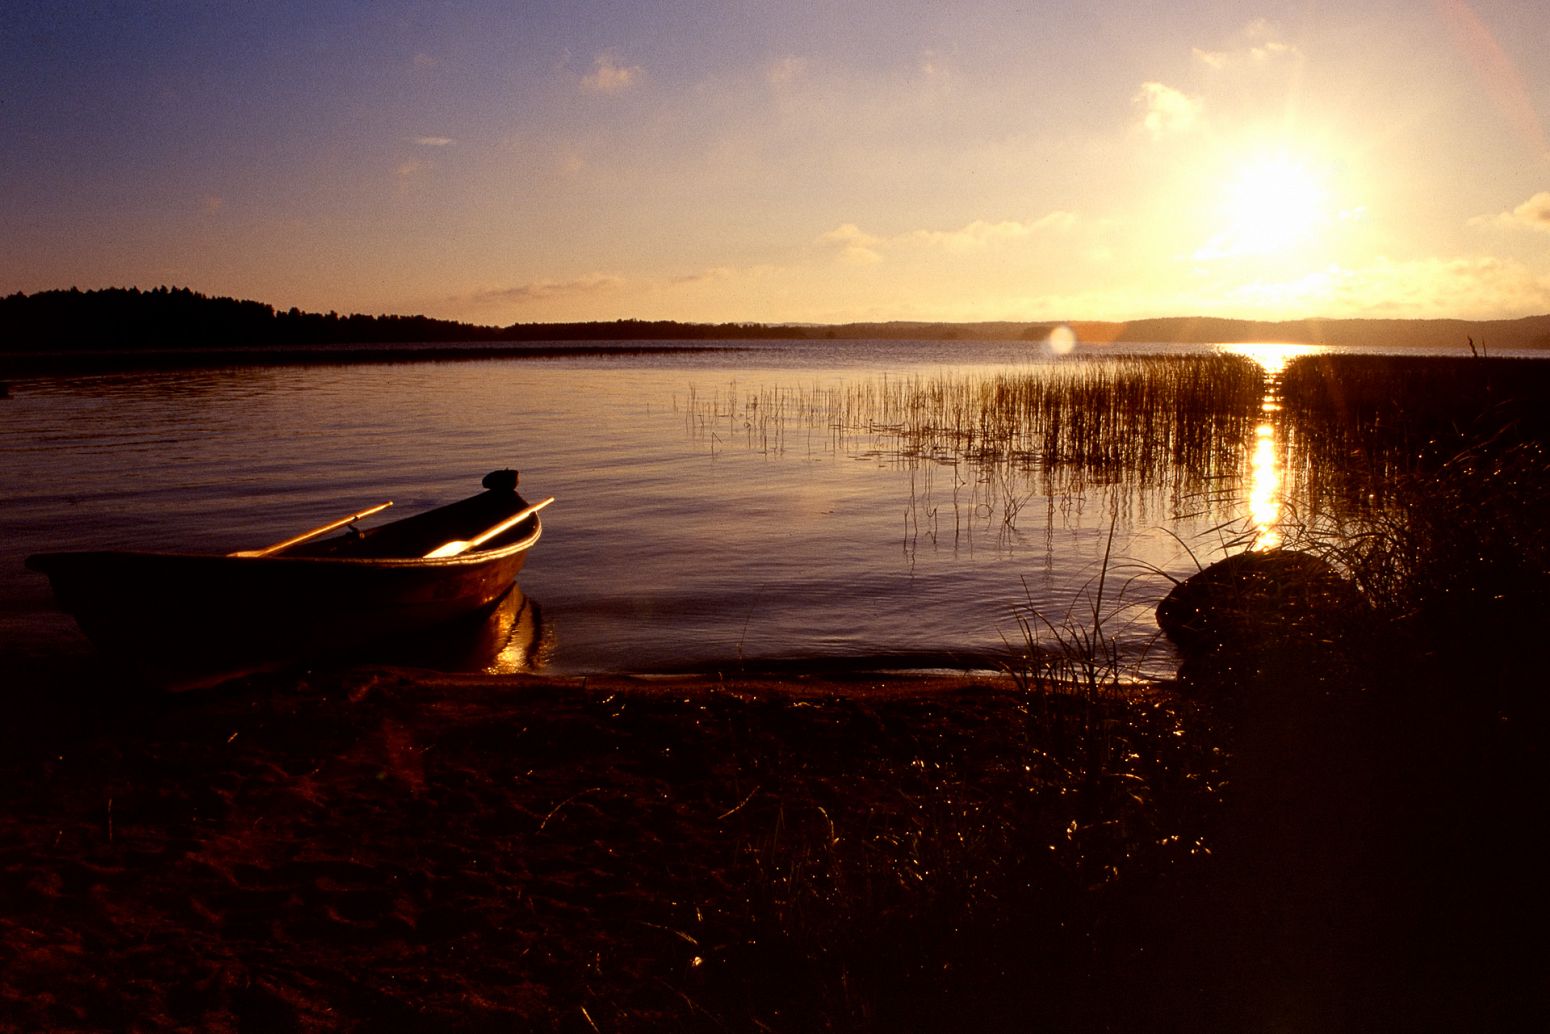 Sunrise by the lake, Orivesi, Finland